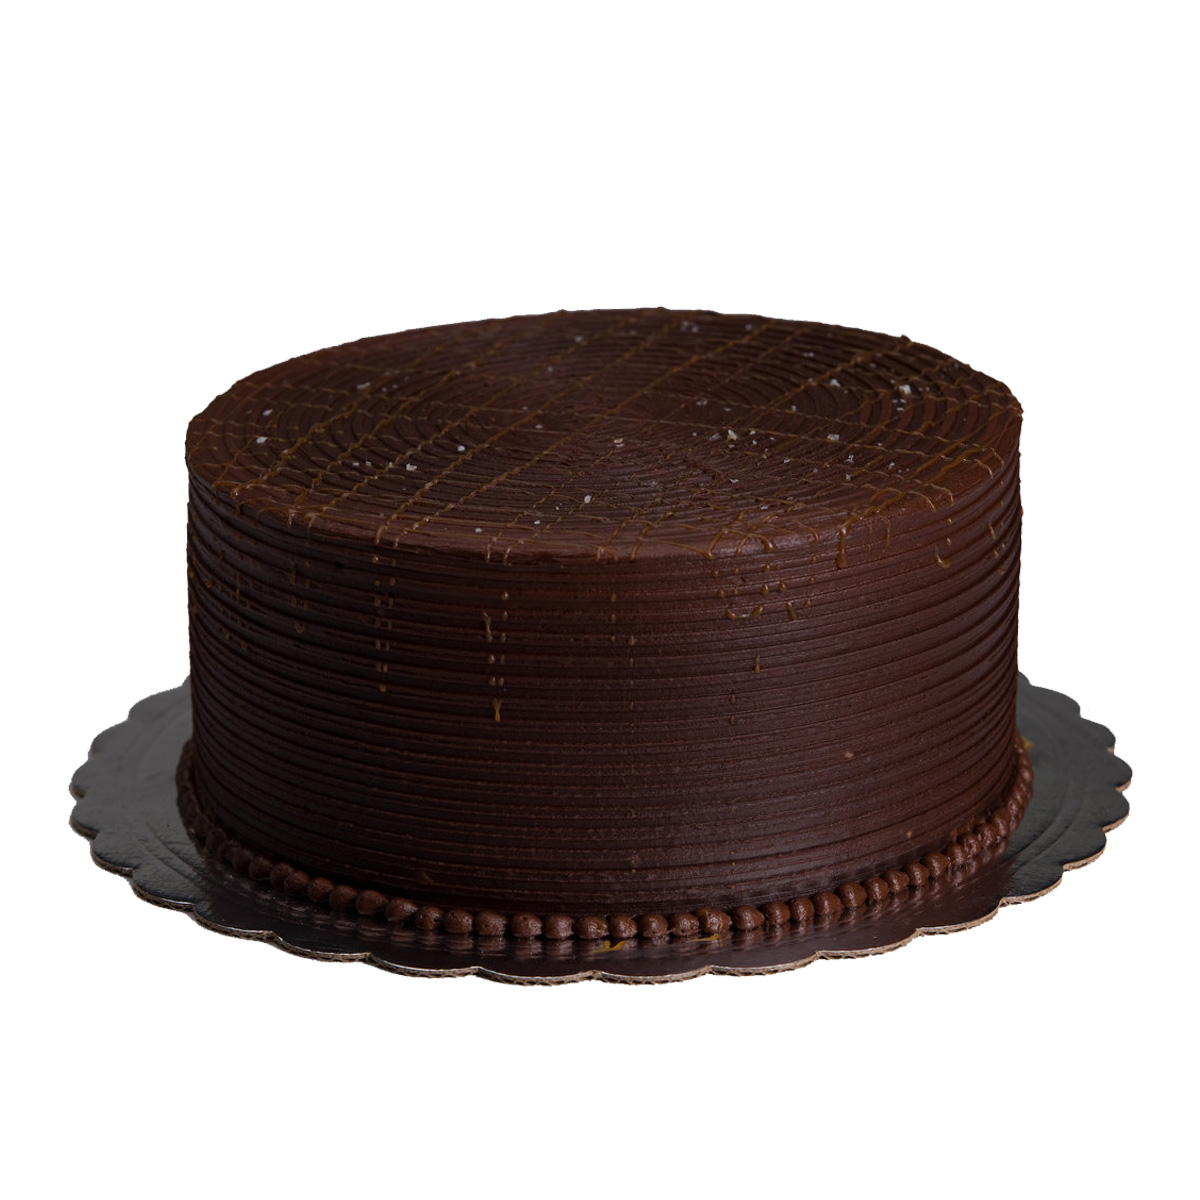 1-kg-truffle-cake